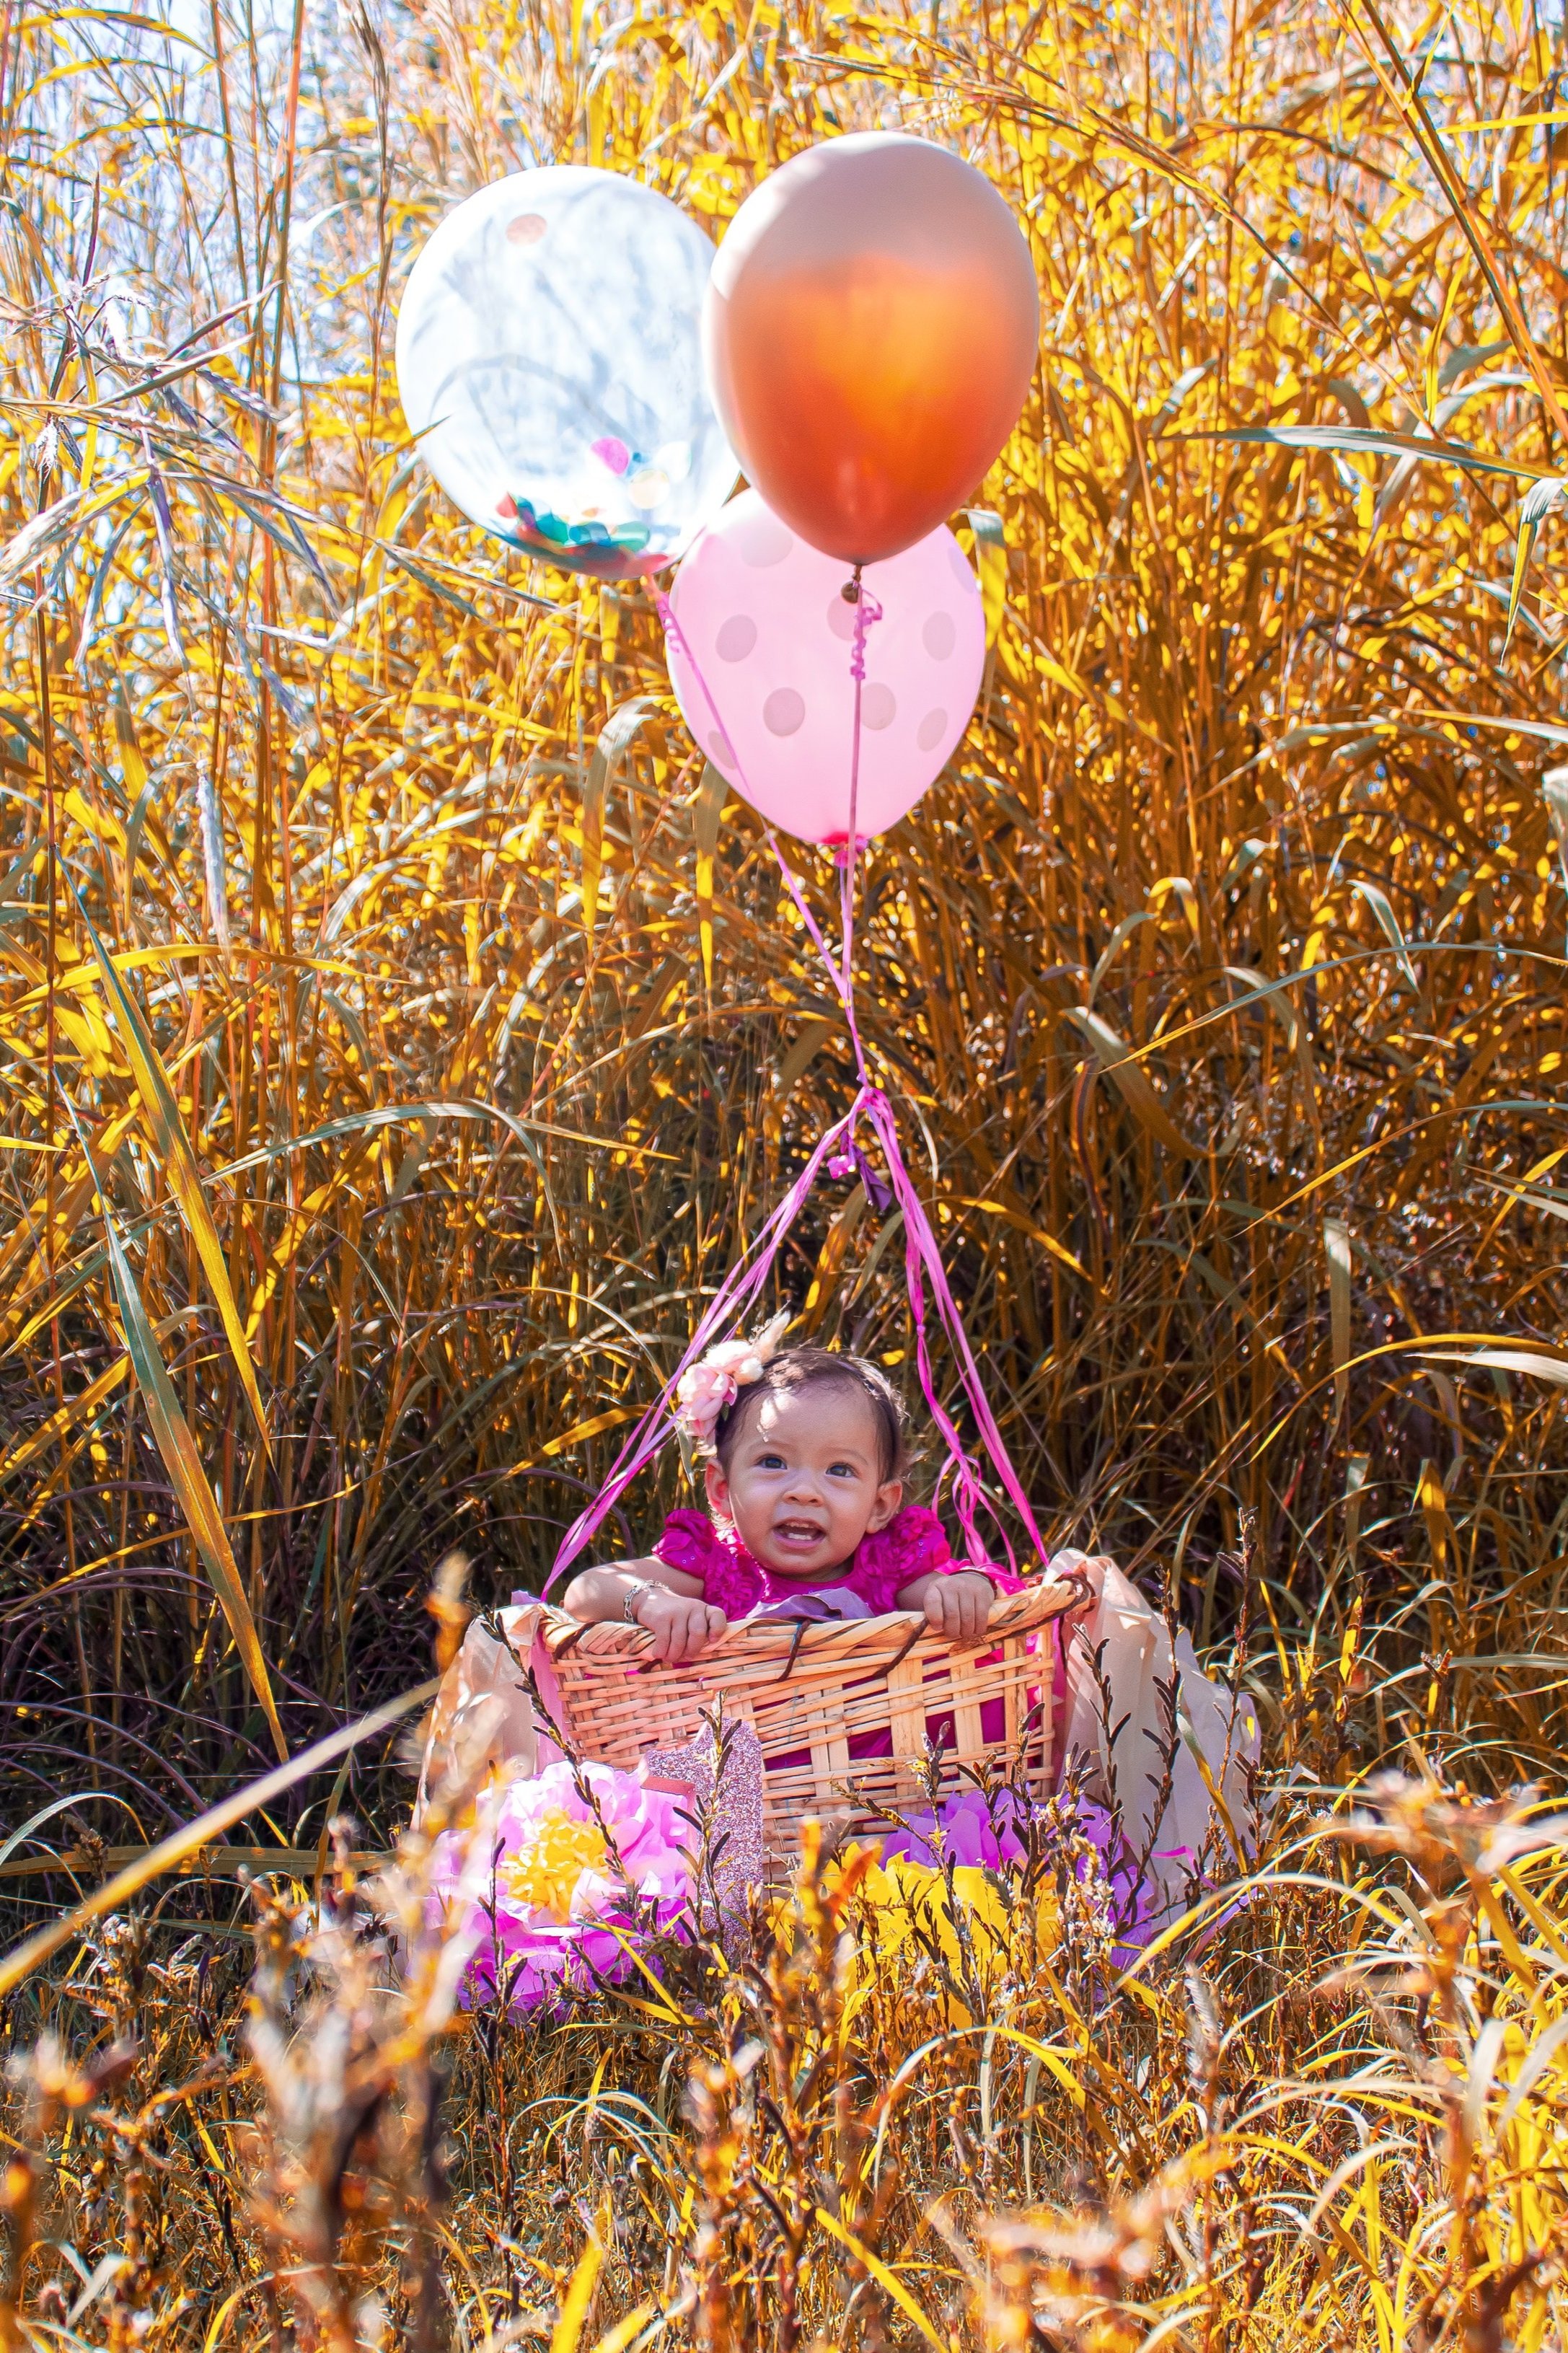 Baby-Fall-Balloons-adolfo-haro-santana-3YlLsRNOk3E-unsplash.jpg